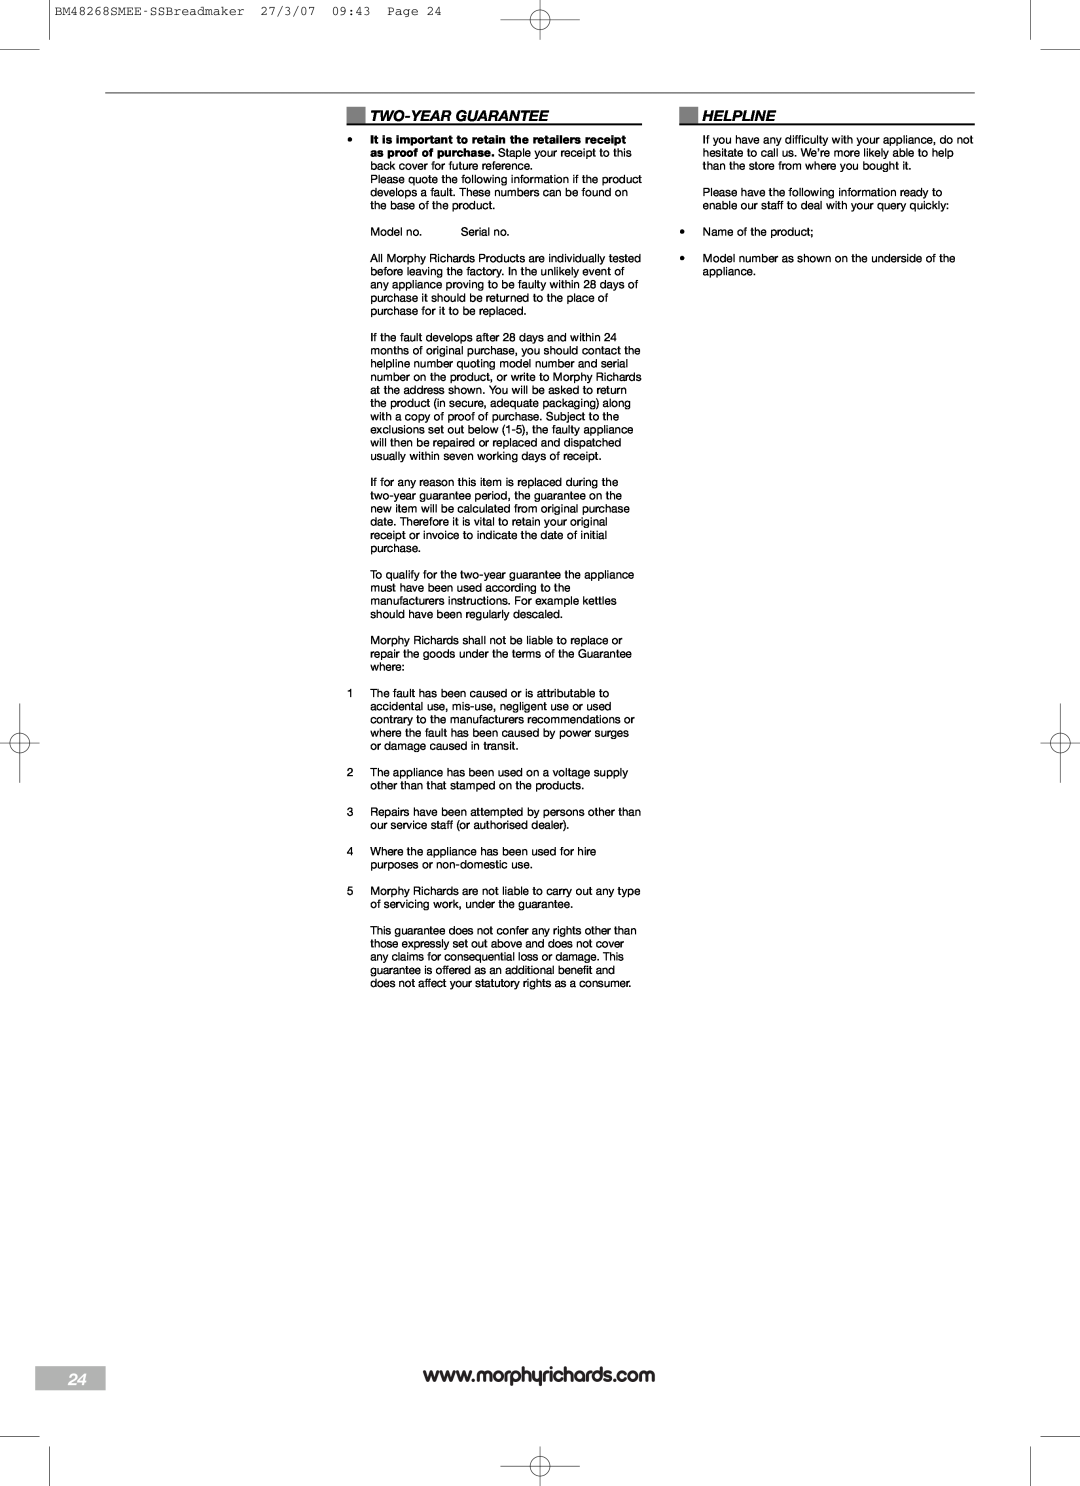 Morphy Richards manual Two-Yearguarantee, Helpline, BM48268SMEE-SSBreadmaker27/3/07 09:43 Page 